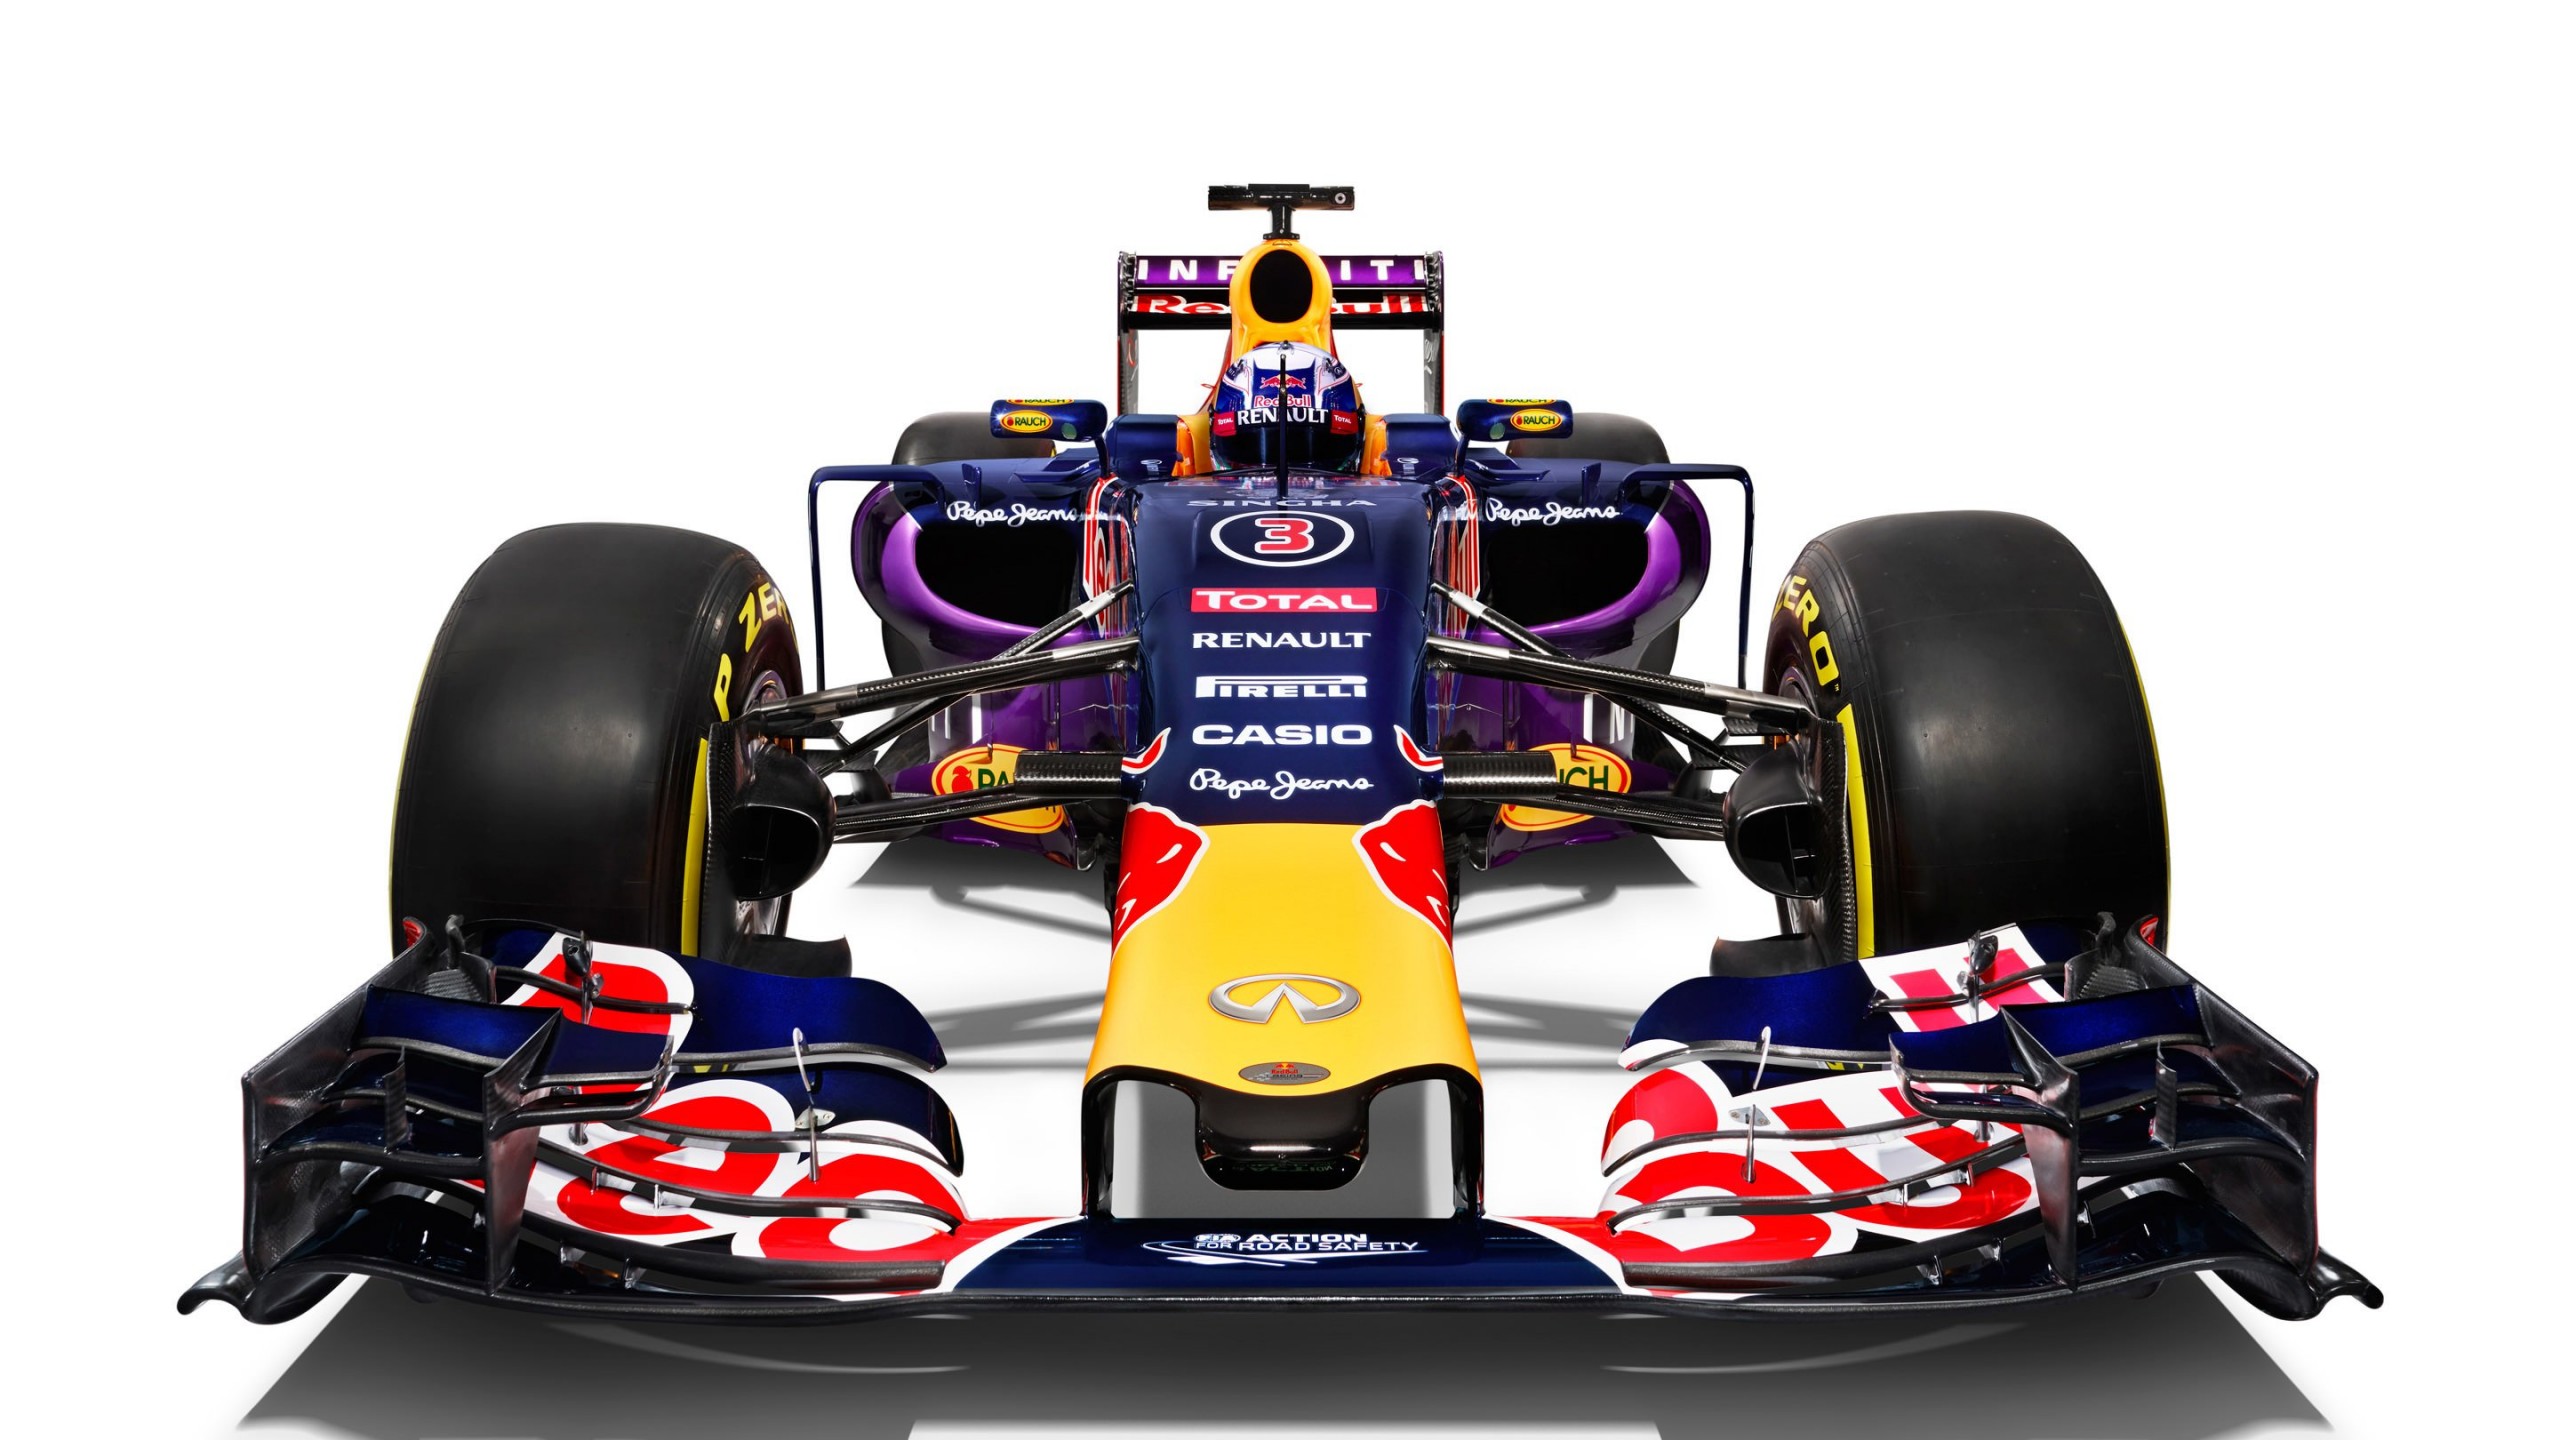 Infiniti Red Bull Racing RB11 2015 Formula 1 Car Wallpaper for Social Media YouTube Channel Art